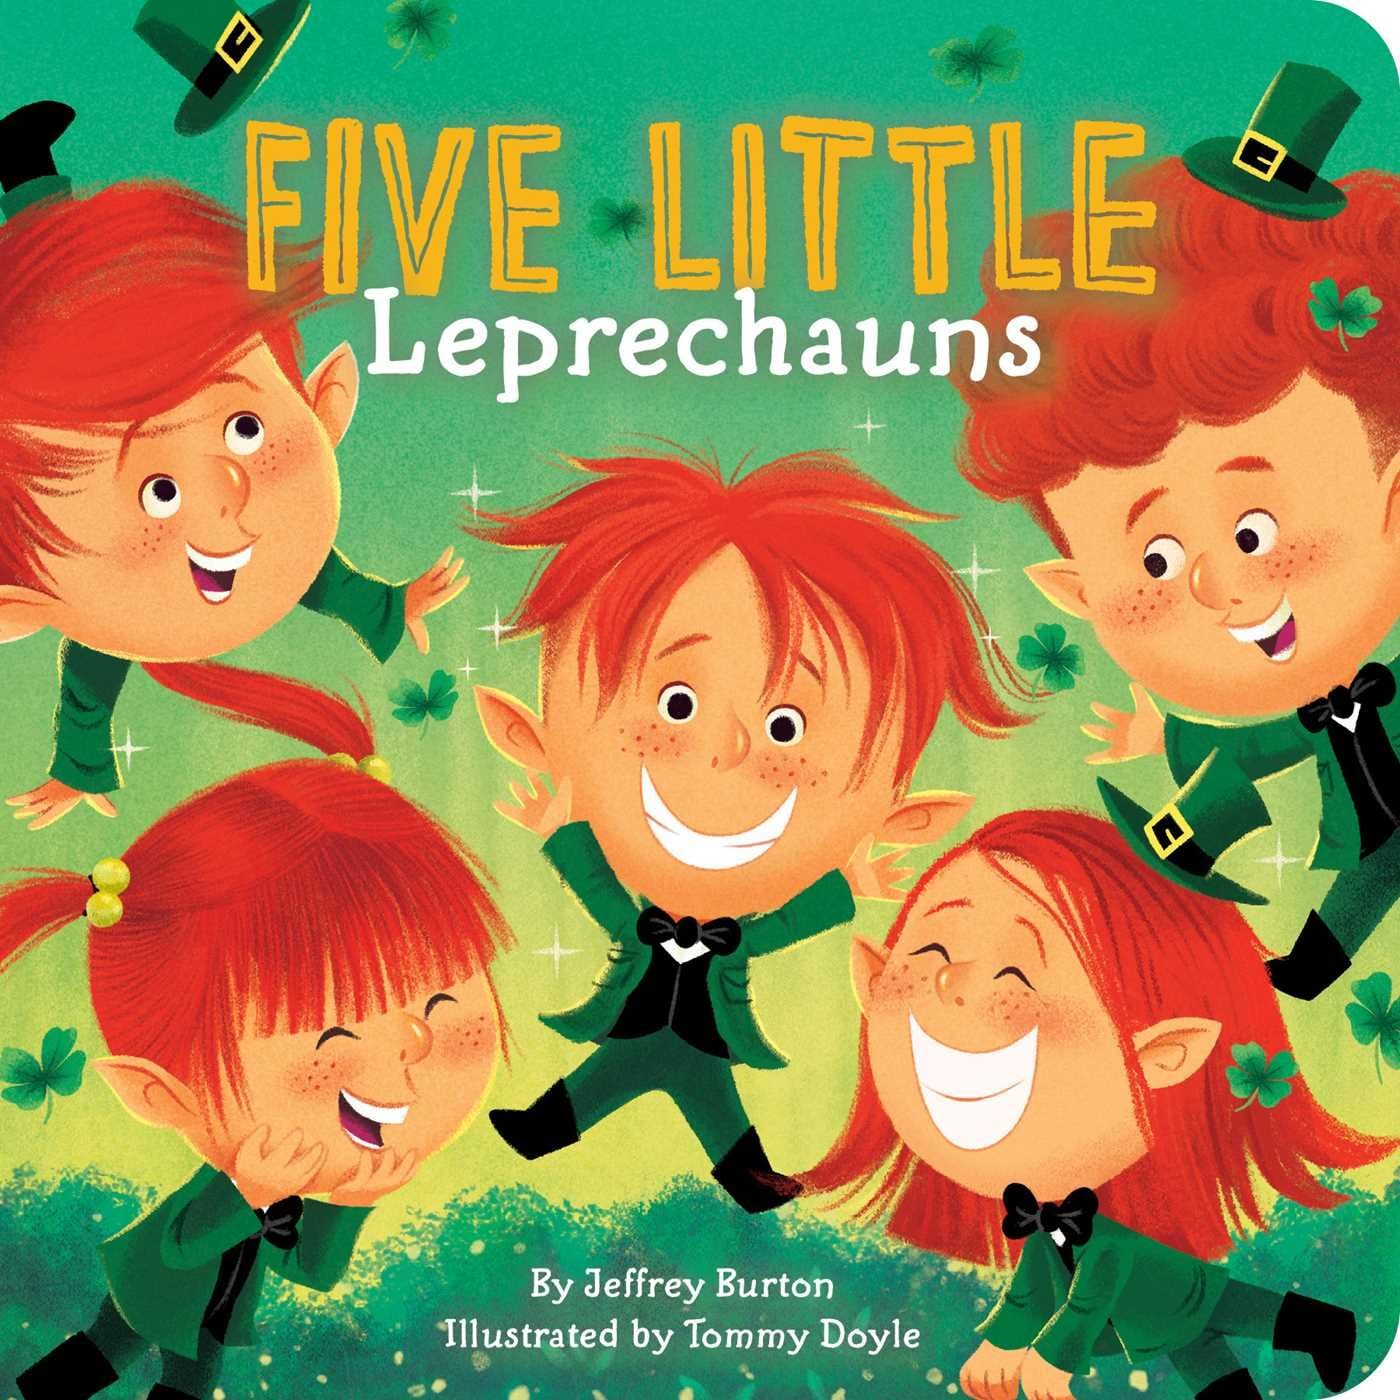 Five-Little-Leprechauns Leprechaun Books for Toddlers